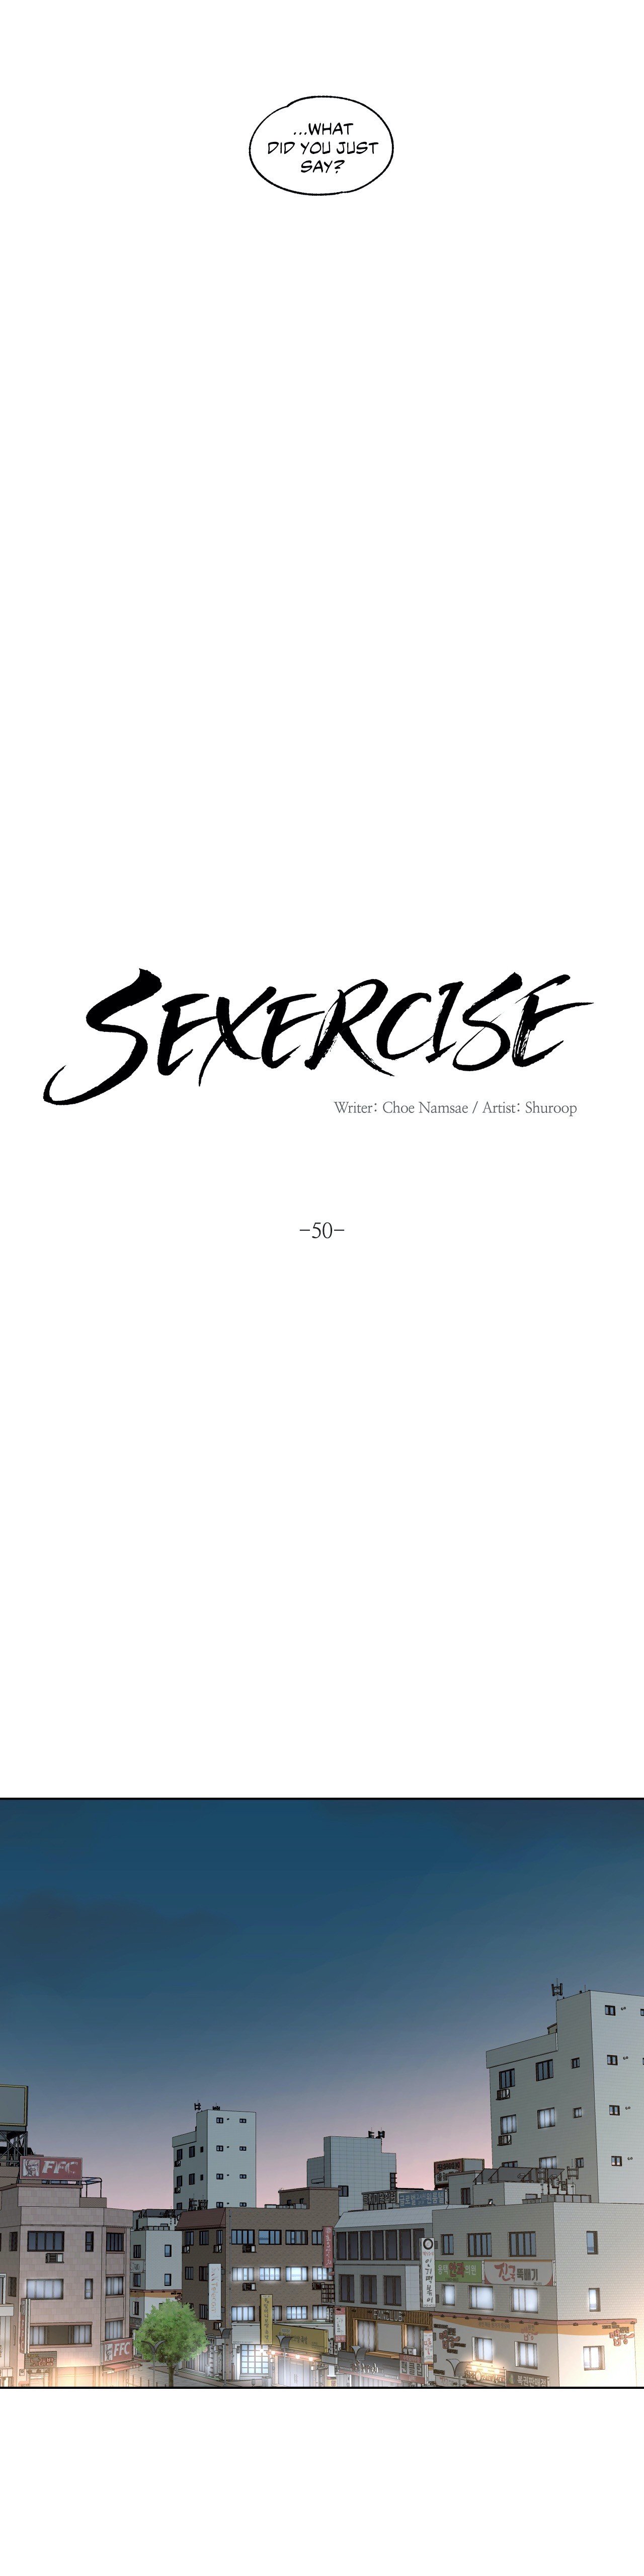 sexercise-chap-50-6